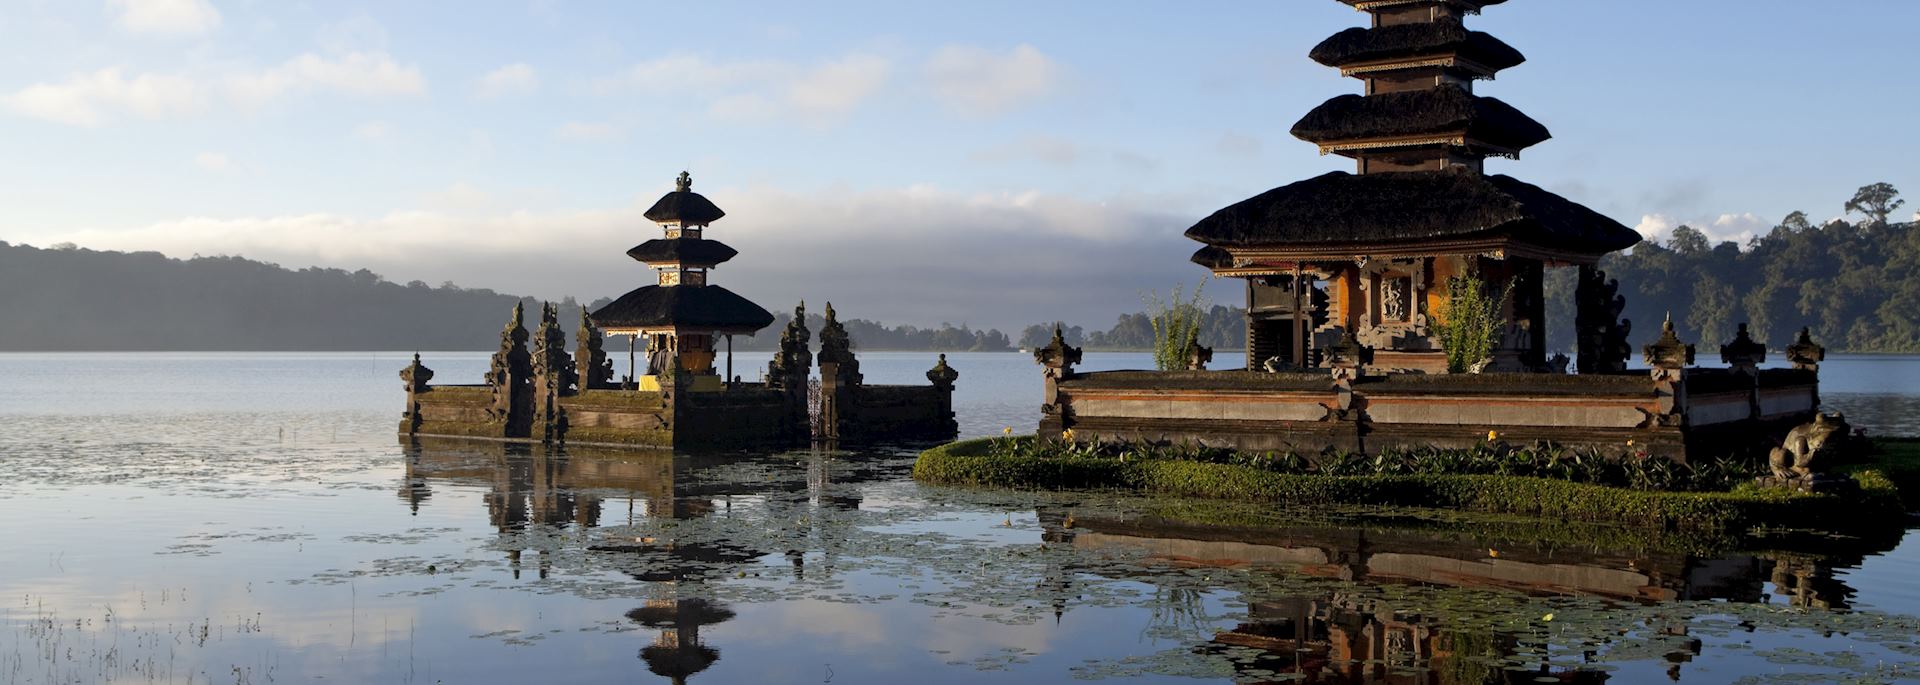 Pura Ulun Danu Bratan temple, Lake Bratan, Bali